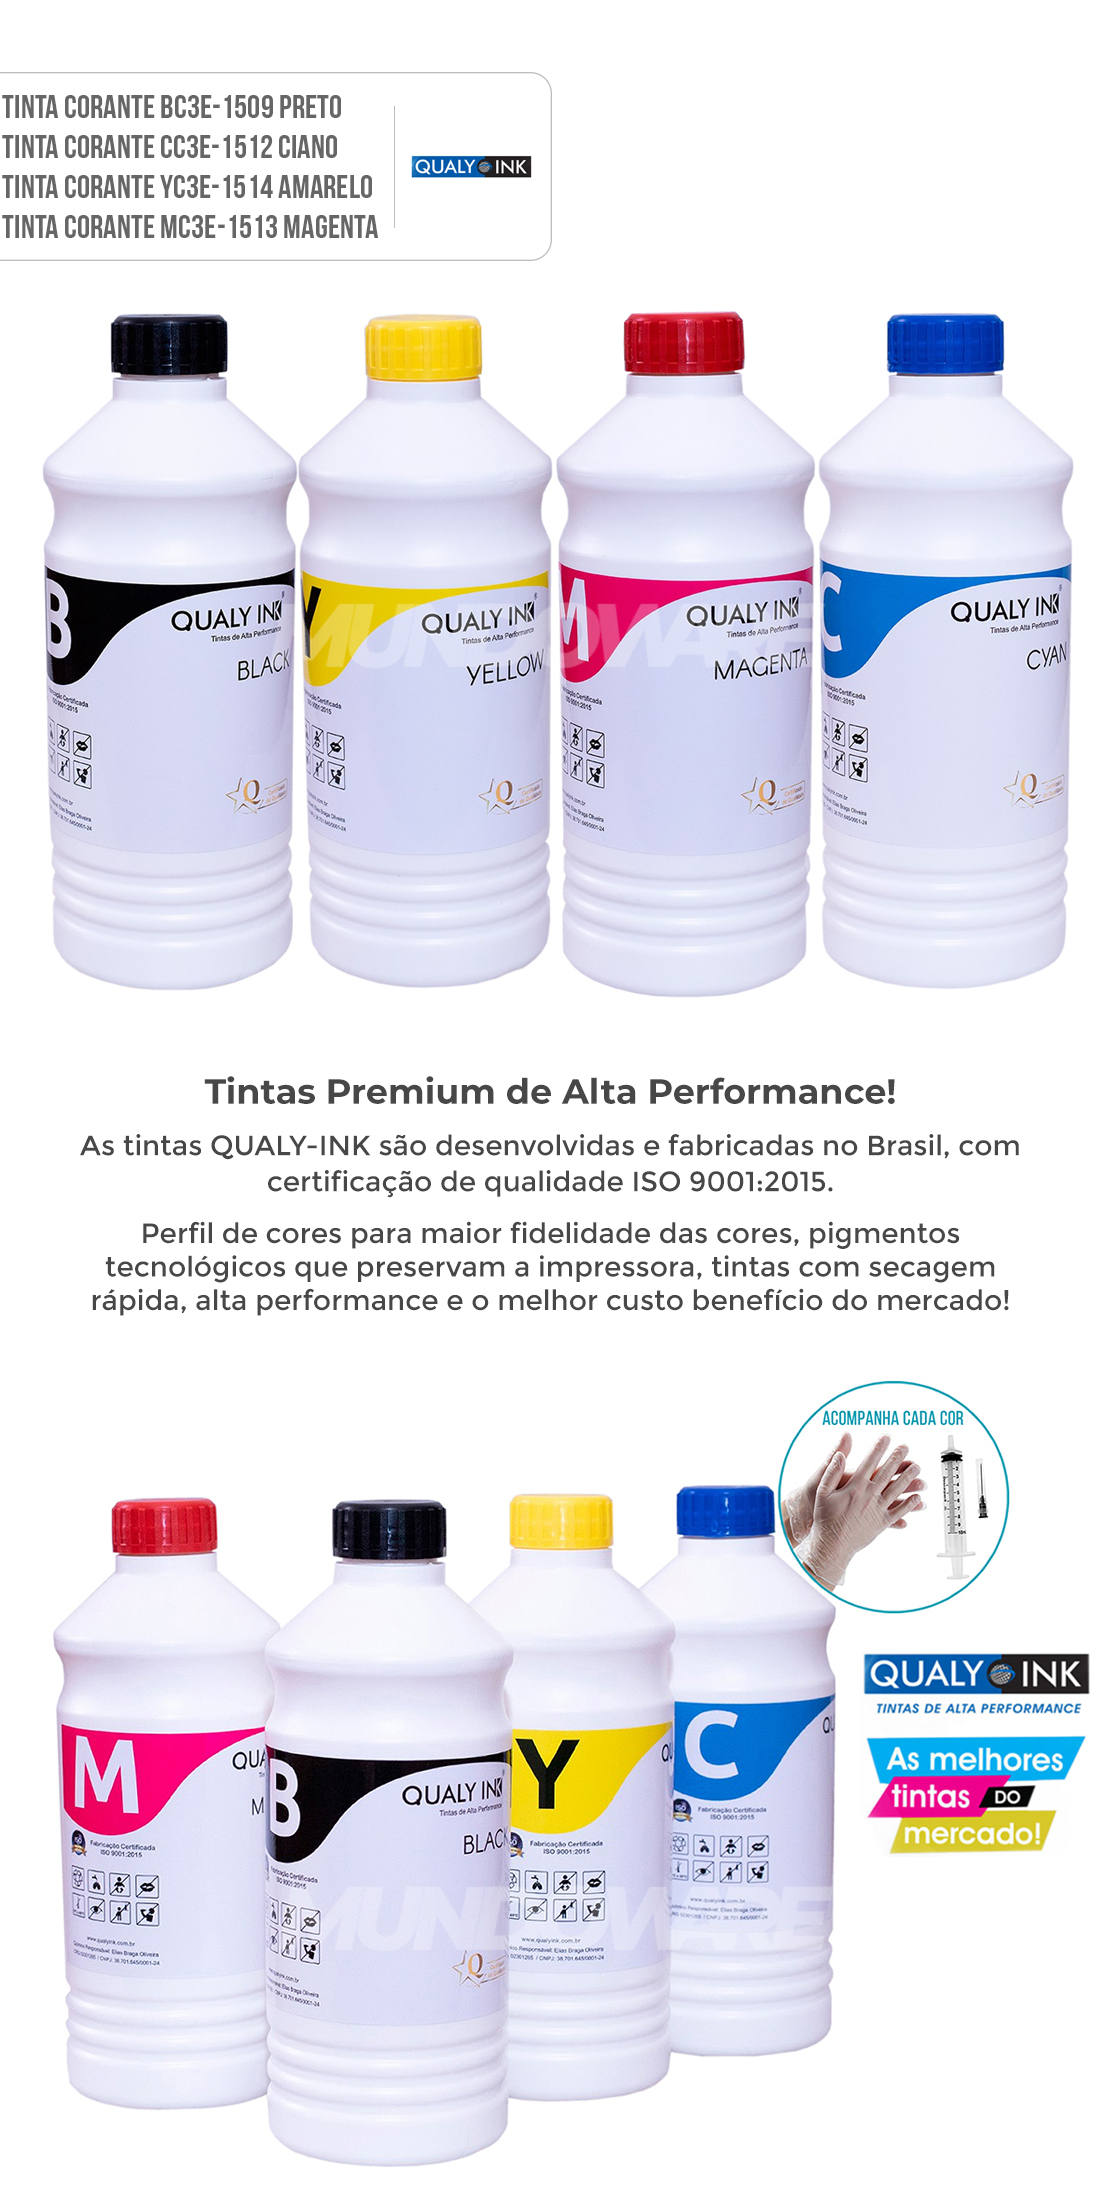 Kit 4 Cores Refil de Tinta Qualy-Ink Corante para Epson série 664 impressoras L100 L110 L120 L200 L210 L220 L300 L355 L365 L375 L380 L395 L396 L455 L475 L495 L550 L555 L565 L575 L606 4 Litros